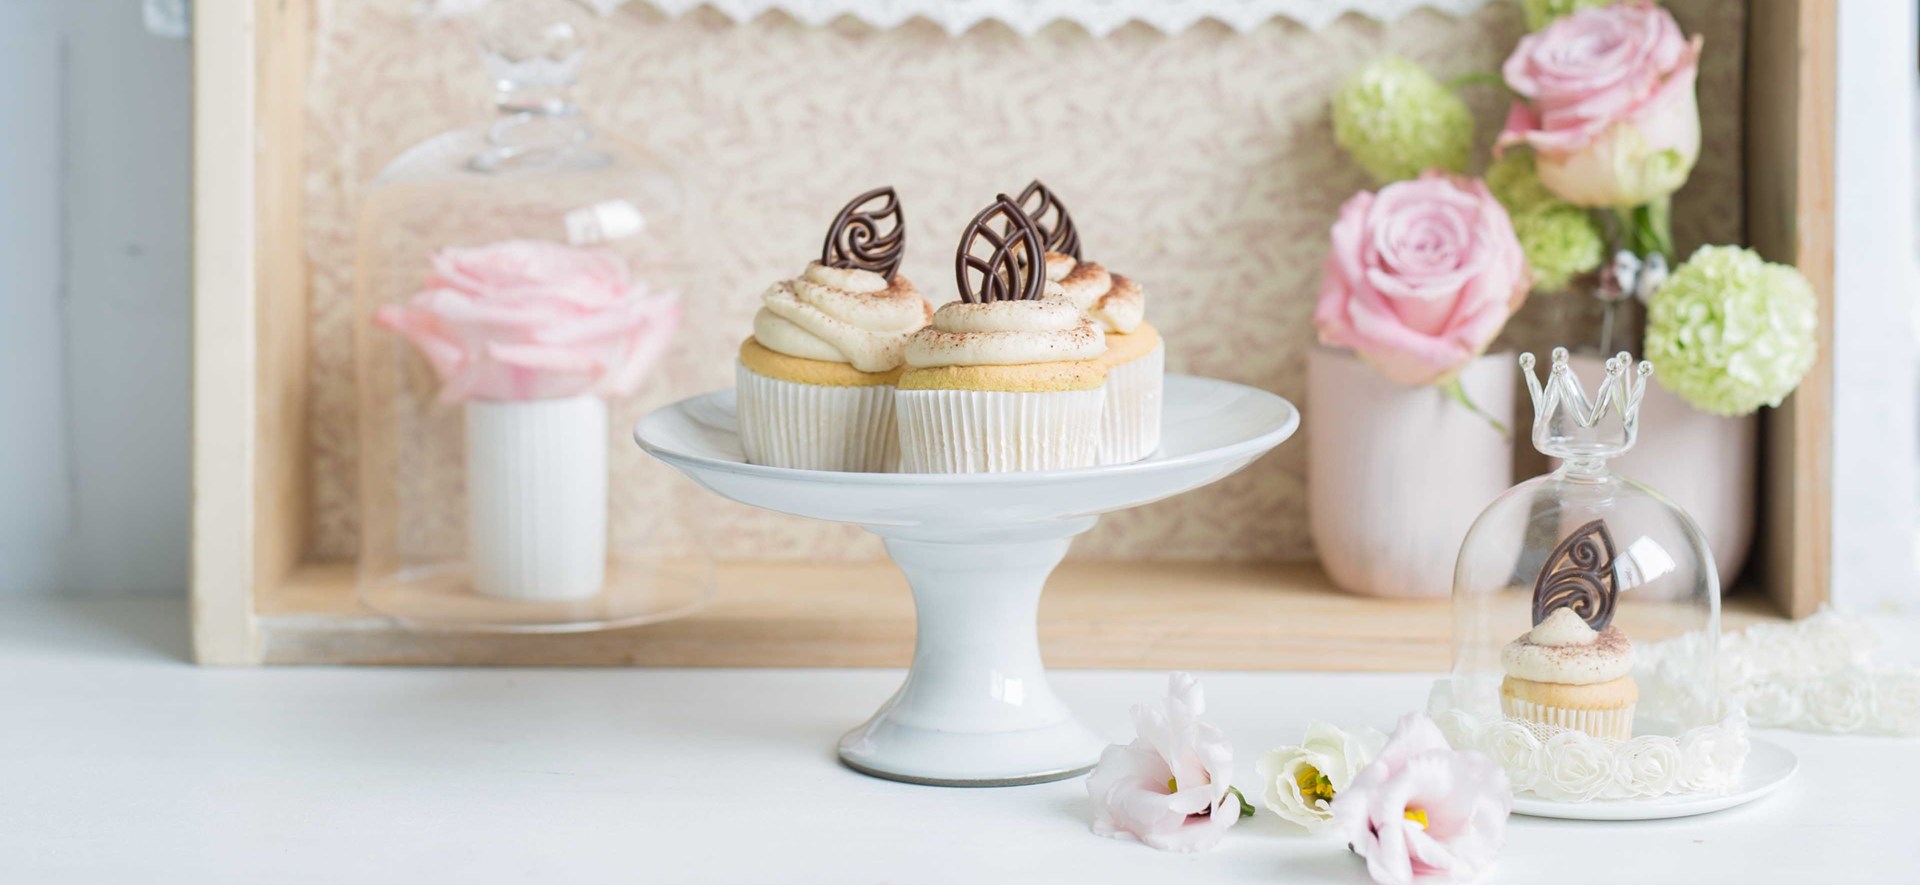 Bild zu Tiramisu-Cupcakes